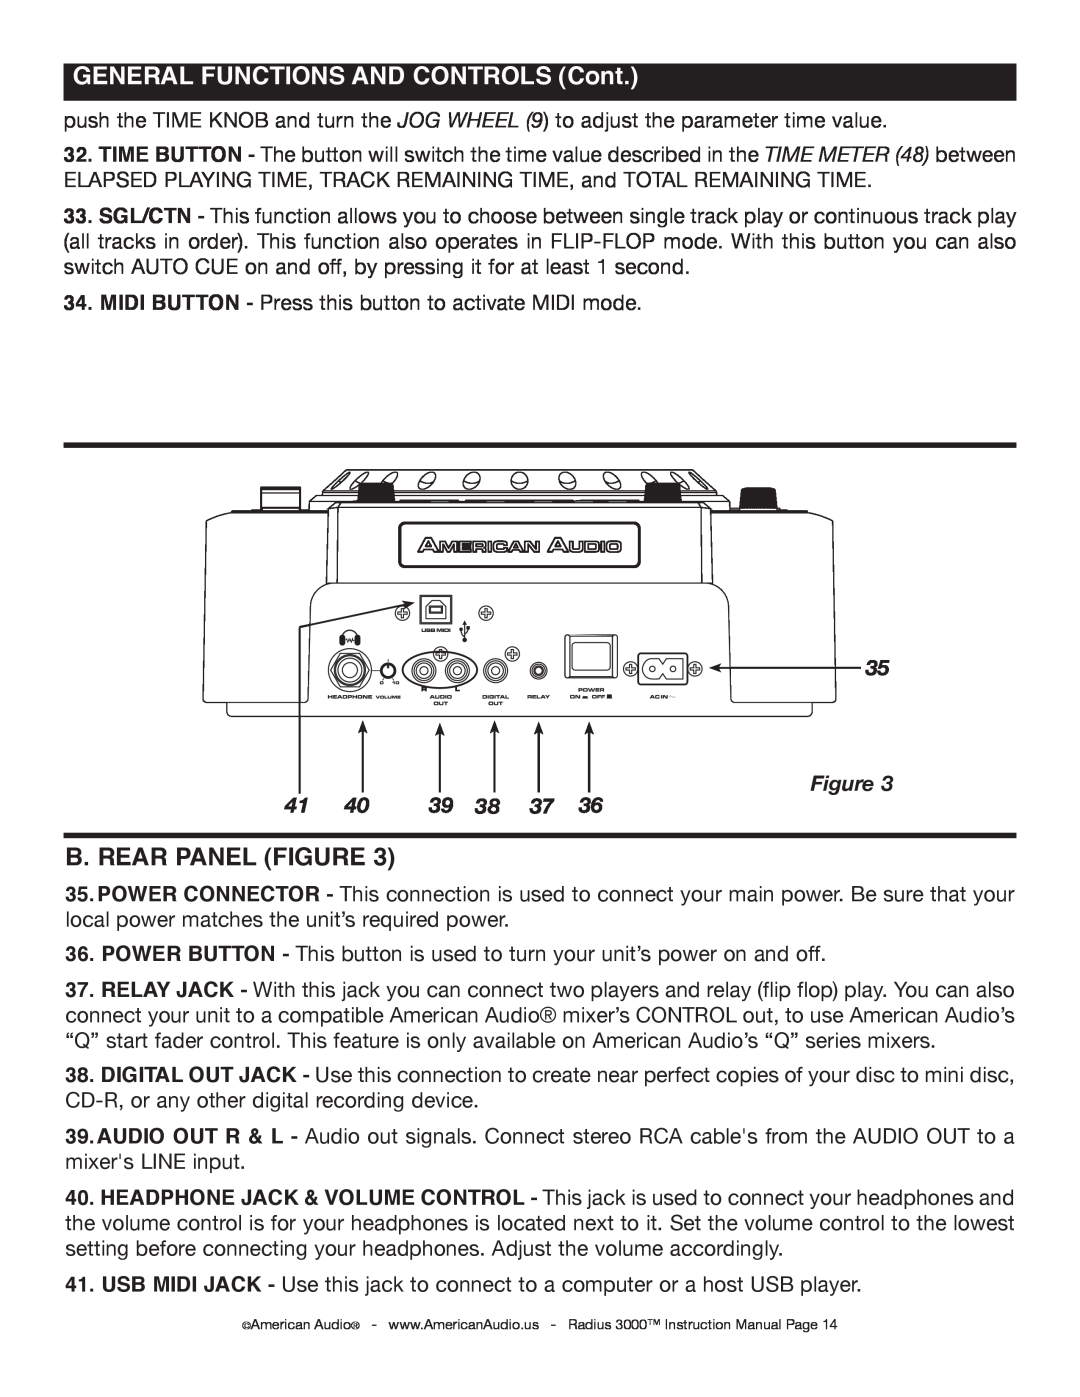 American Audio Radius 3000 manual B. Rear Panel Figure, GENERAL Functions and controls Cont 